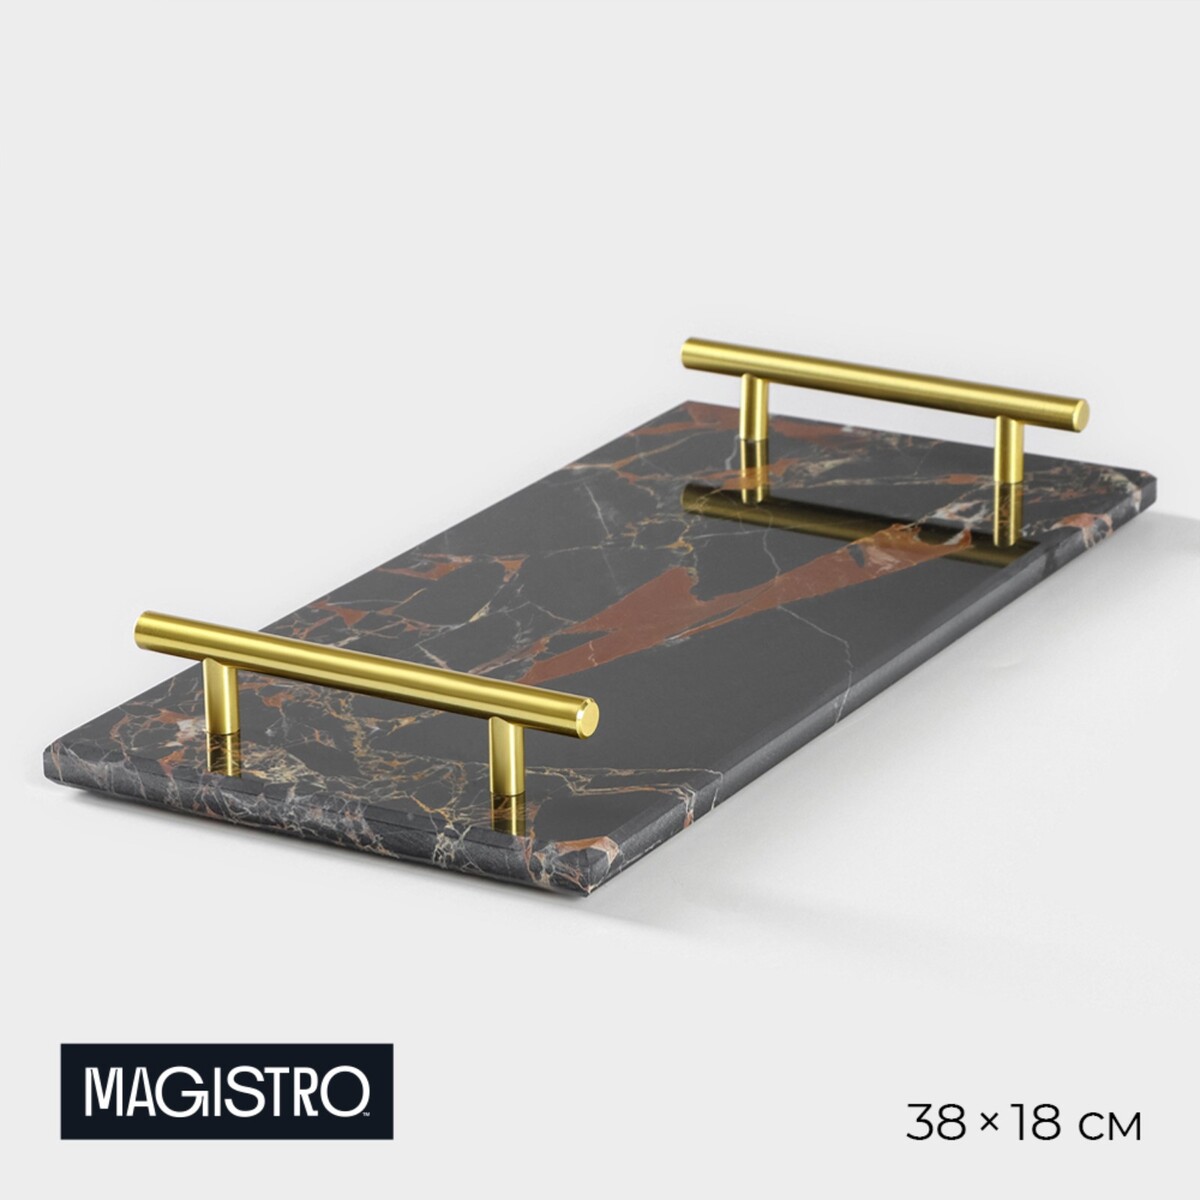 Поднос из мрамора magistro marble, 38×18 см, цвет черный поднос из мрамора magistro marble 37 5×17 5 см изумрудный